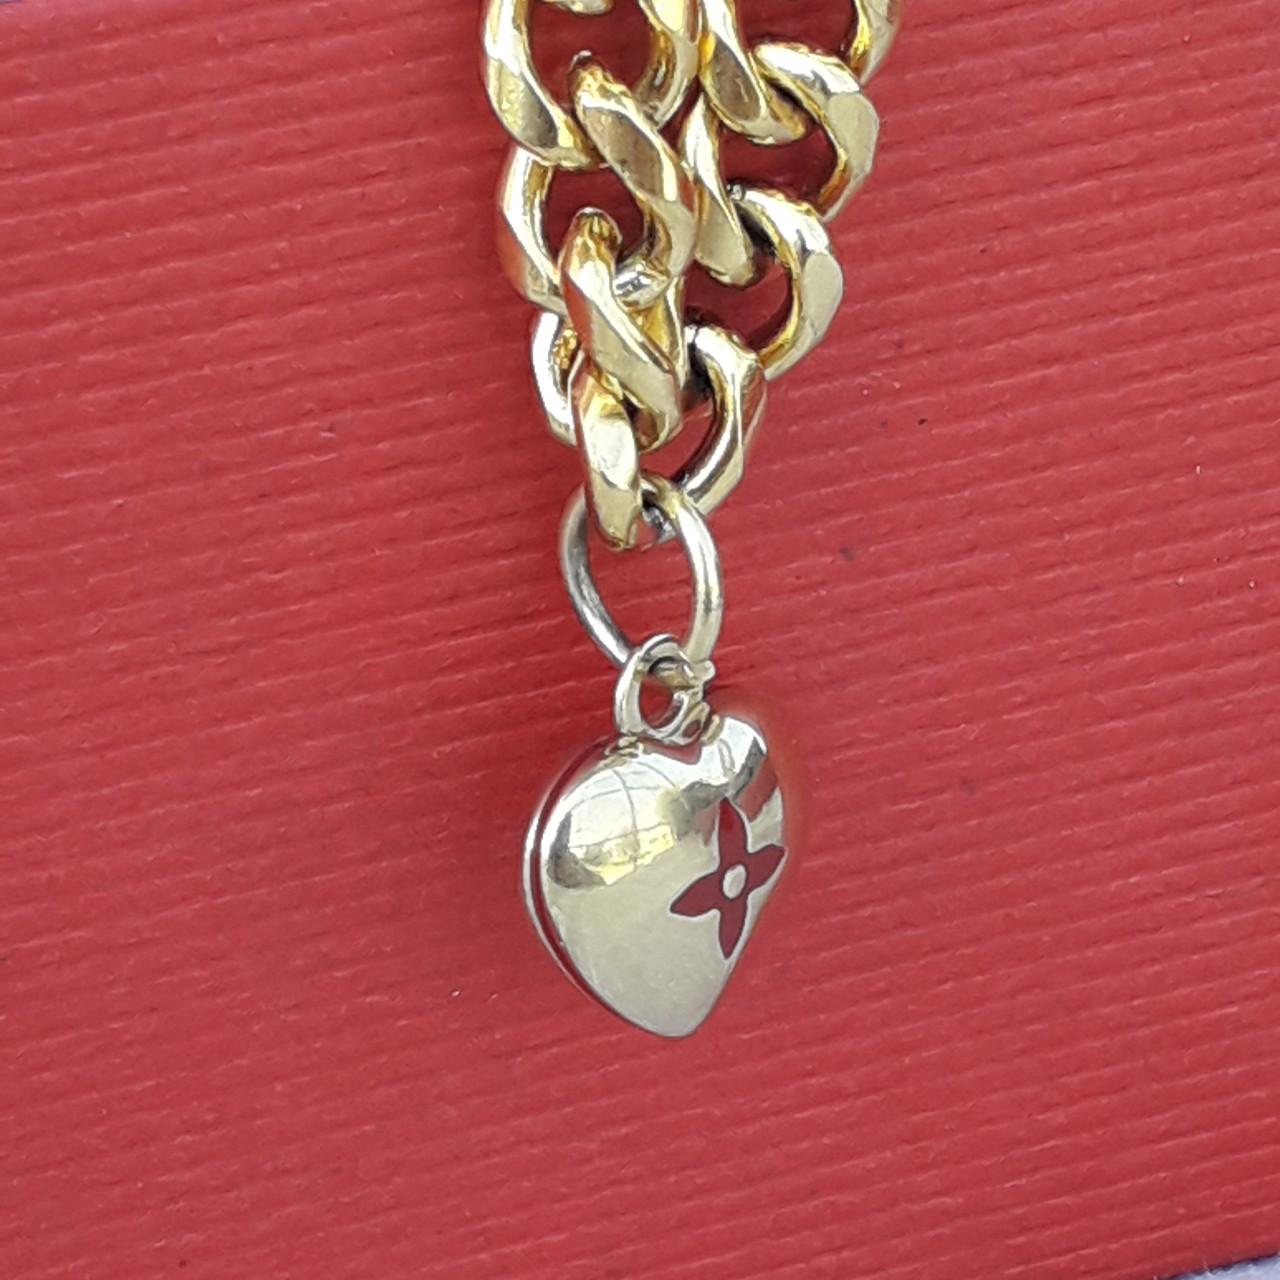 Authentic Louis Vuitton Red Heart & Gold LV Necklace - Depop